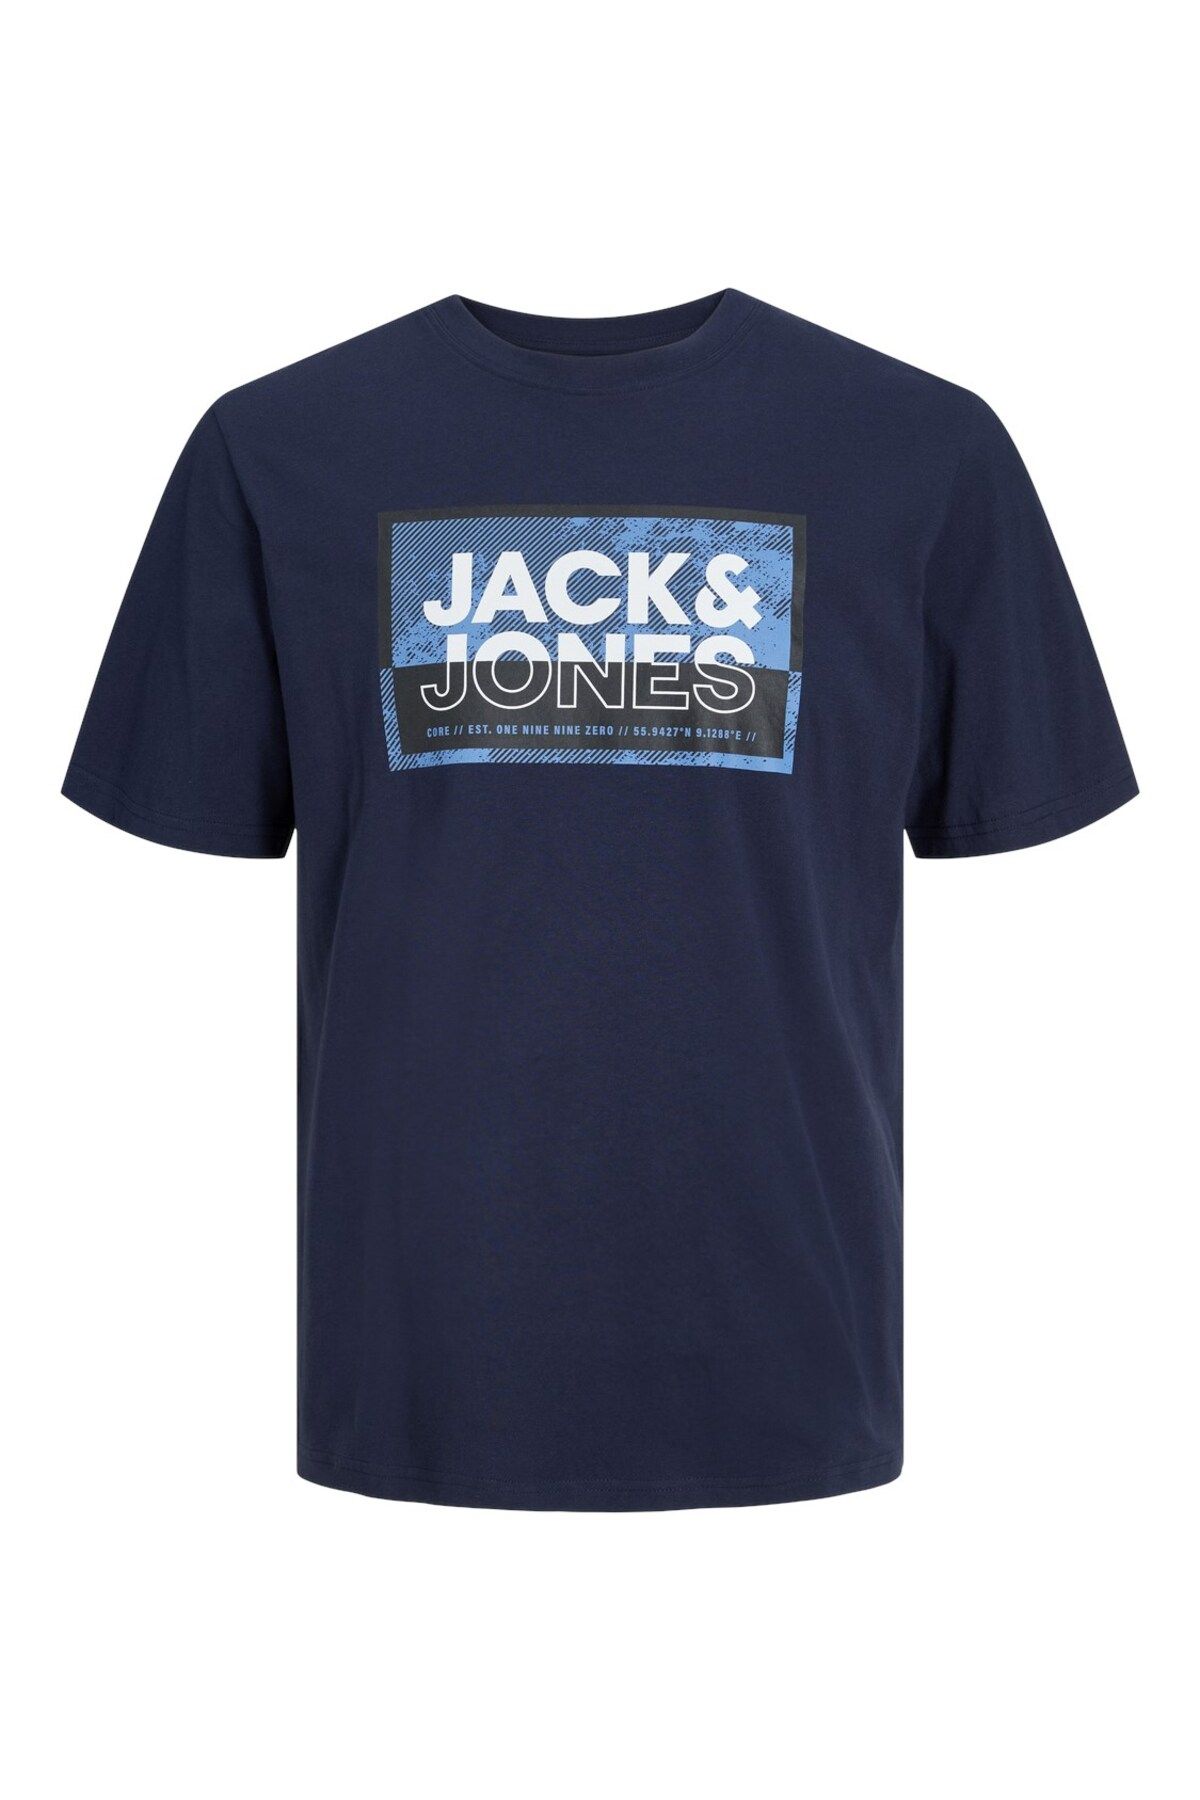 Jack & Jones Jcologan Tee Ss Crew Neck Ss24 Ln Erkek T-shirt 12253442 Navy Blazer